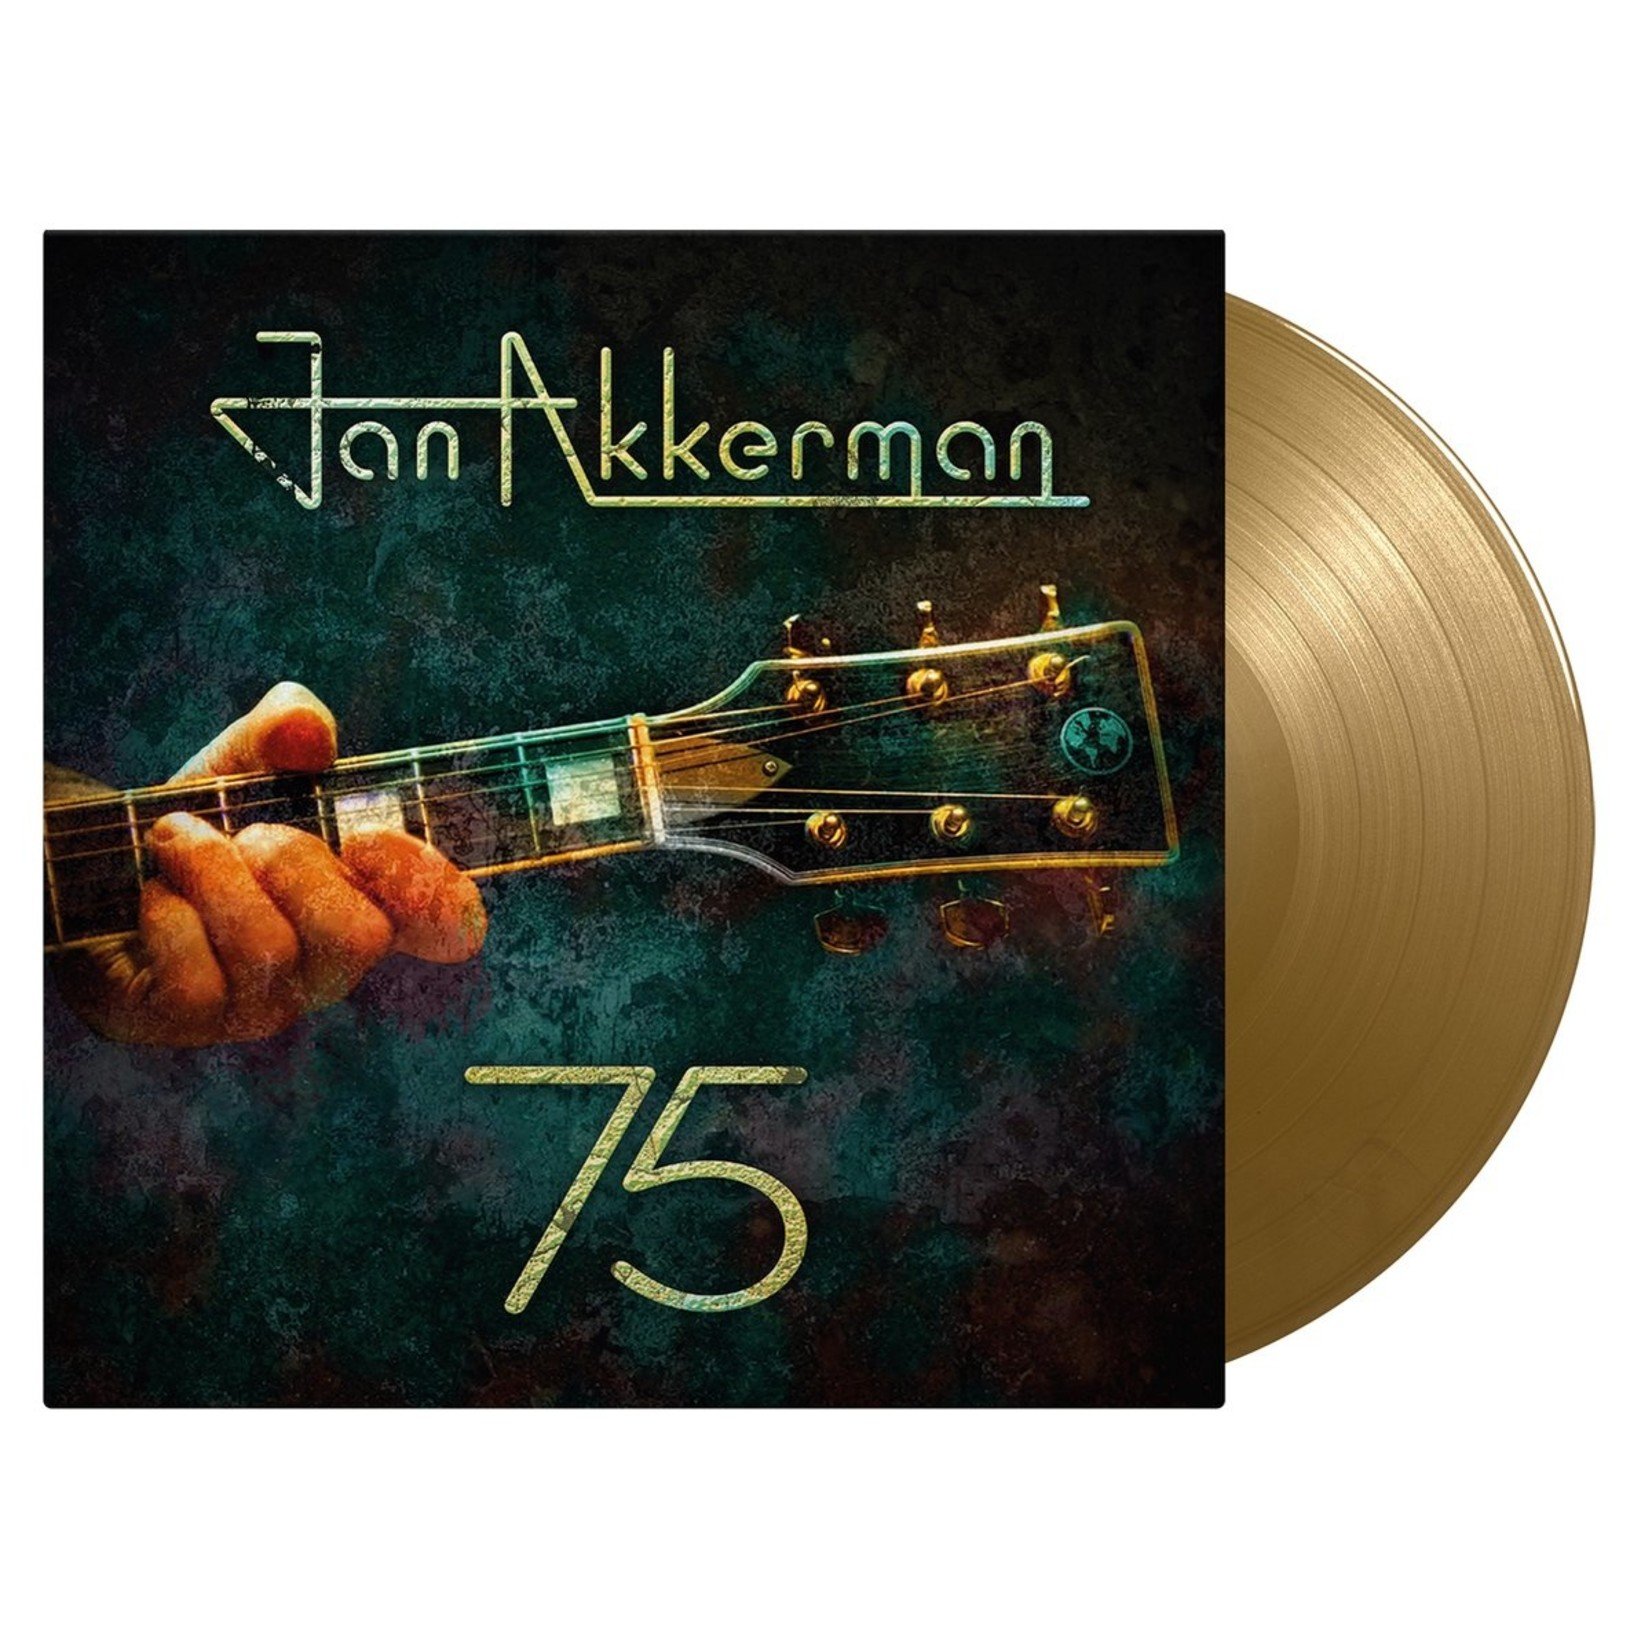 AKKERMAN, JAN 75  180gr/Gatefold/Exclusive Compilation/2000cps Gold Vinyl 2-LP